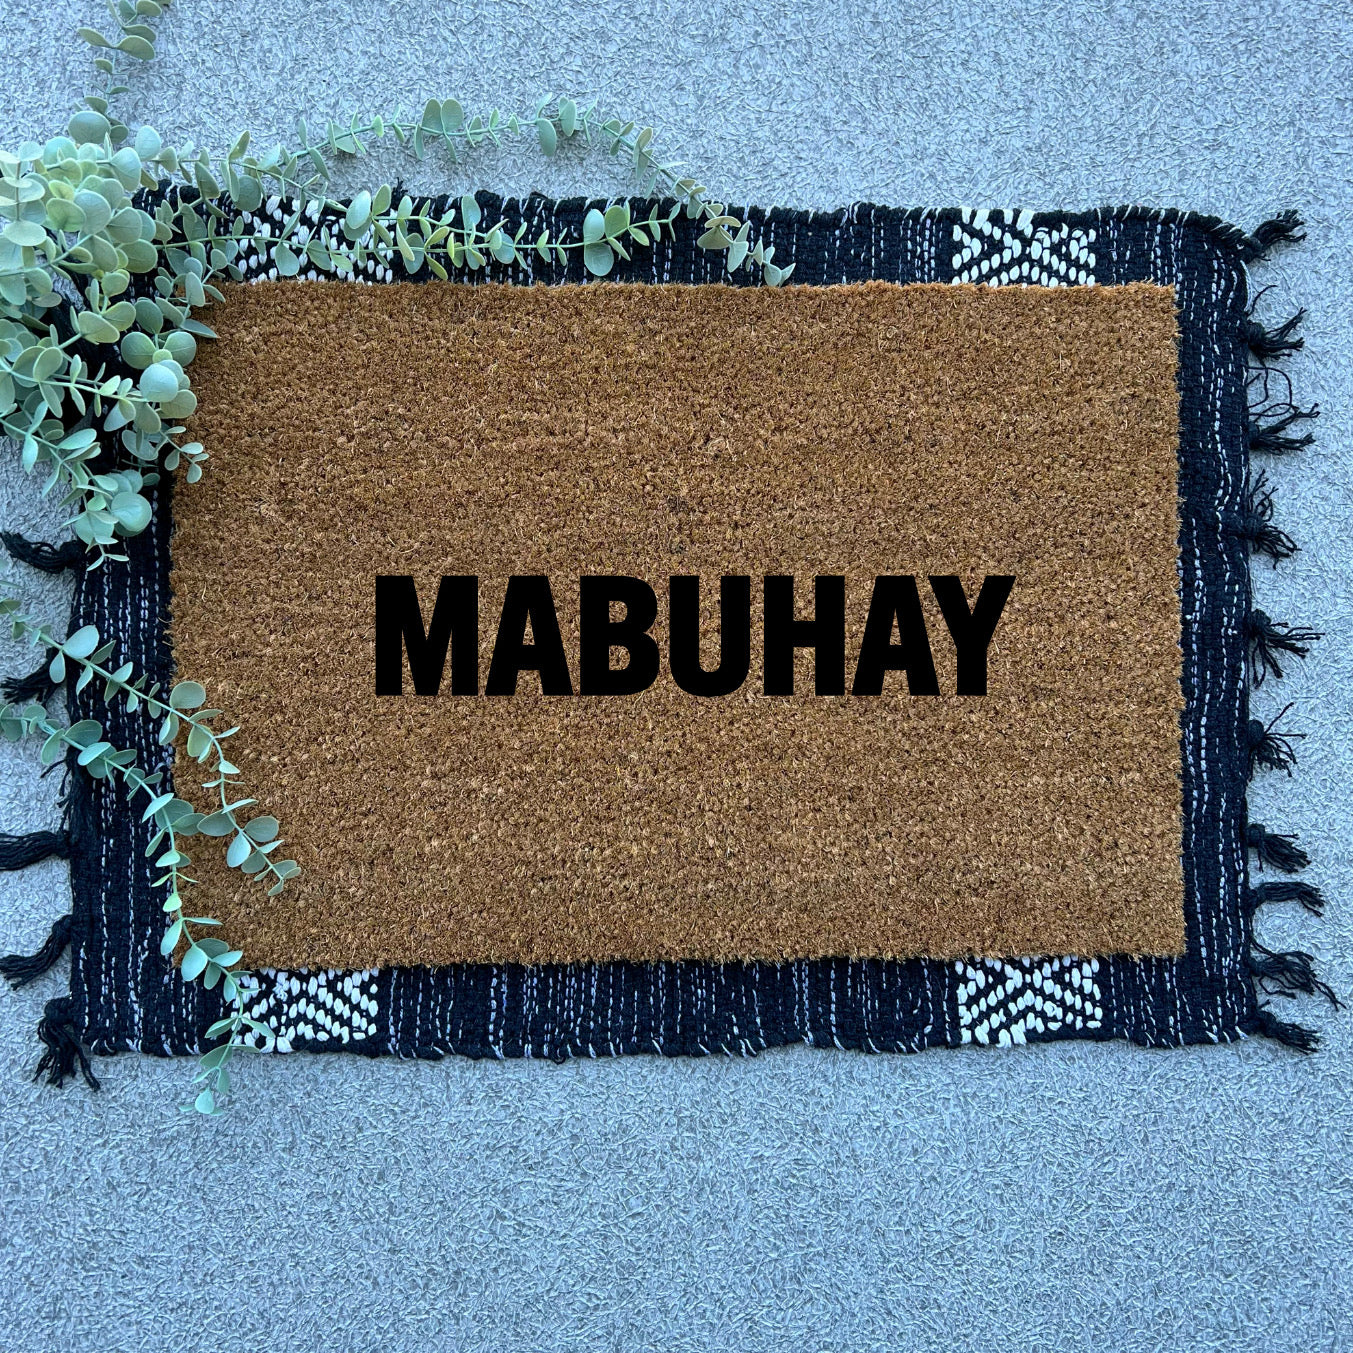 (Filipino) Mabuhay